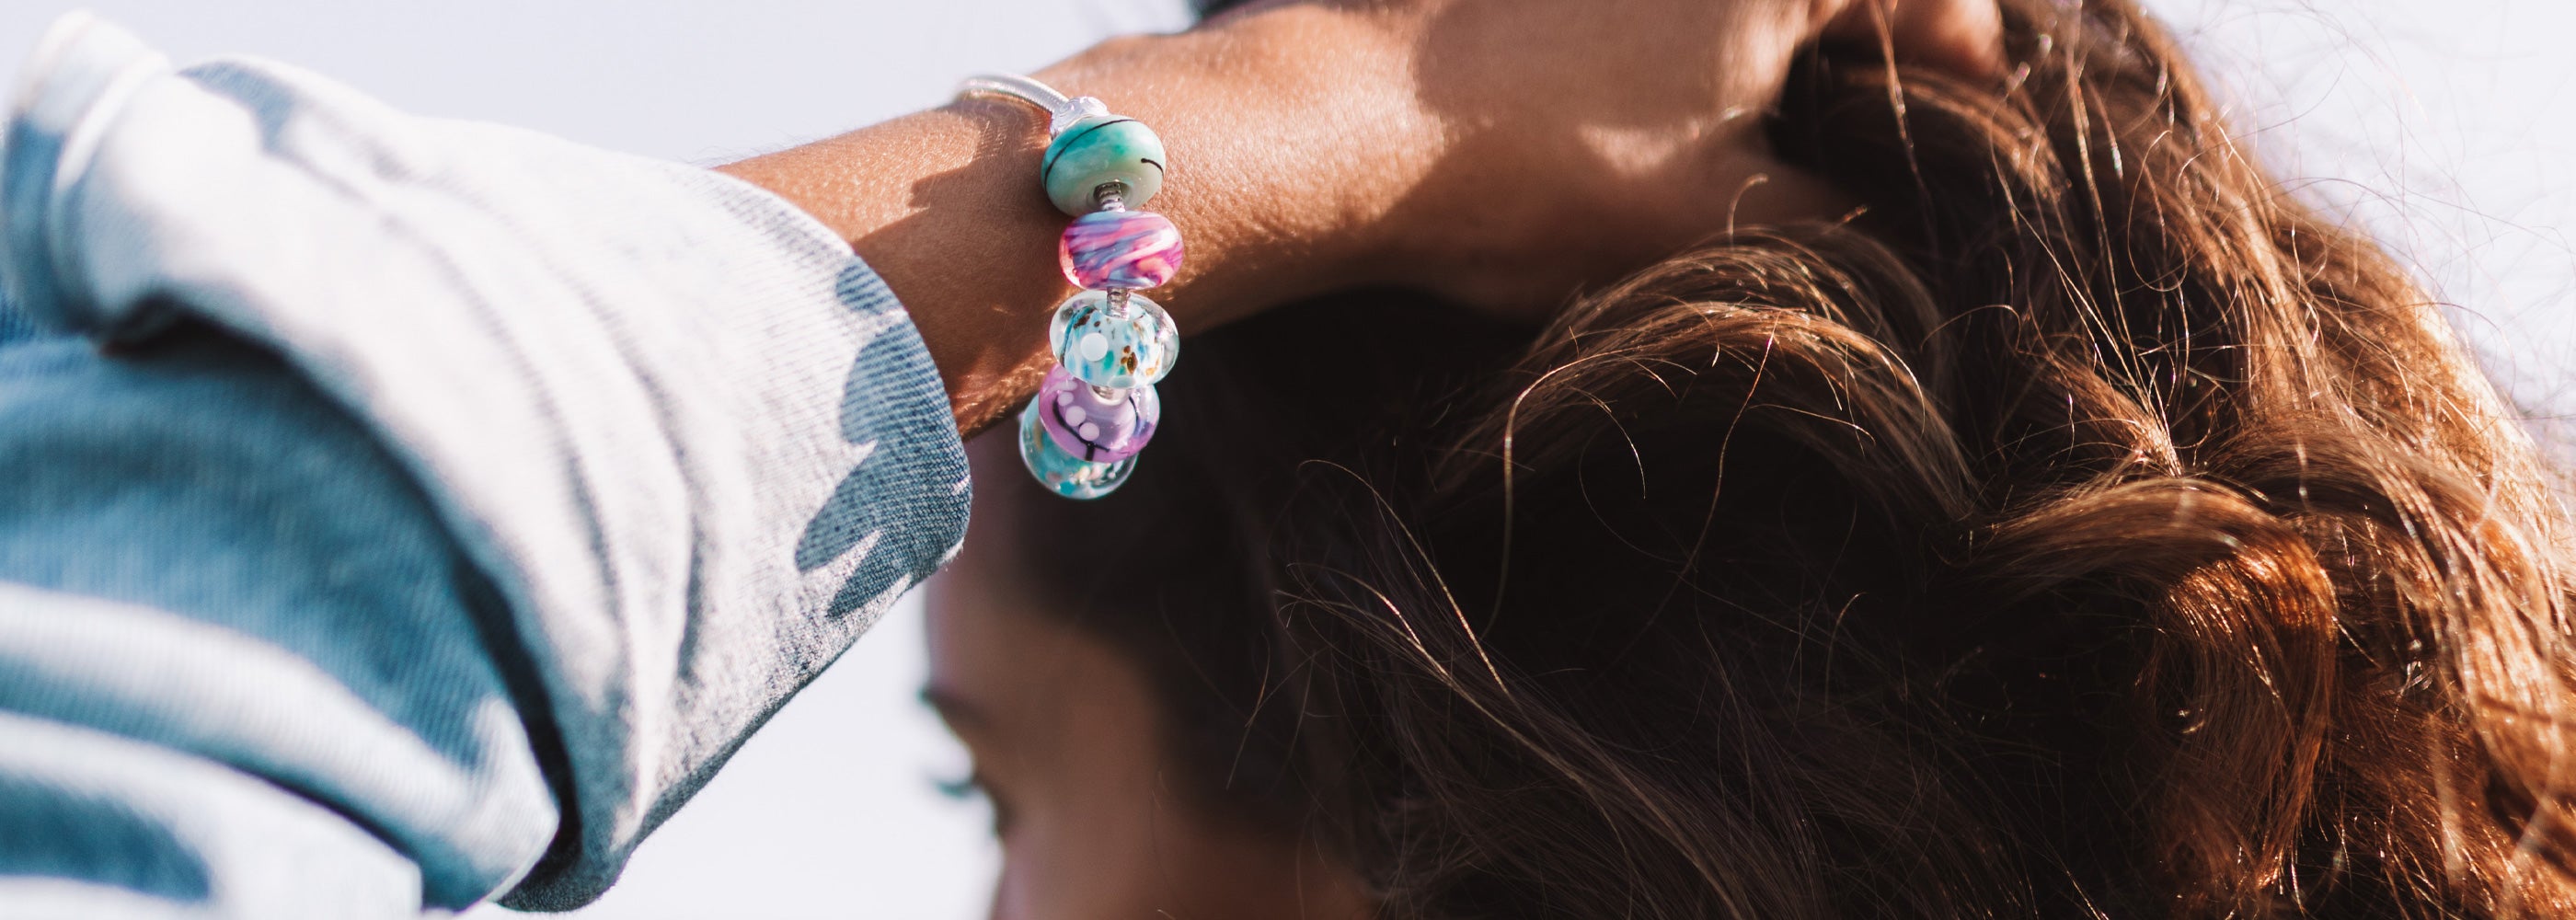 Pink, blue and green murano glass beads worn on silver bracelet, girl wearing denim jacket.